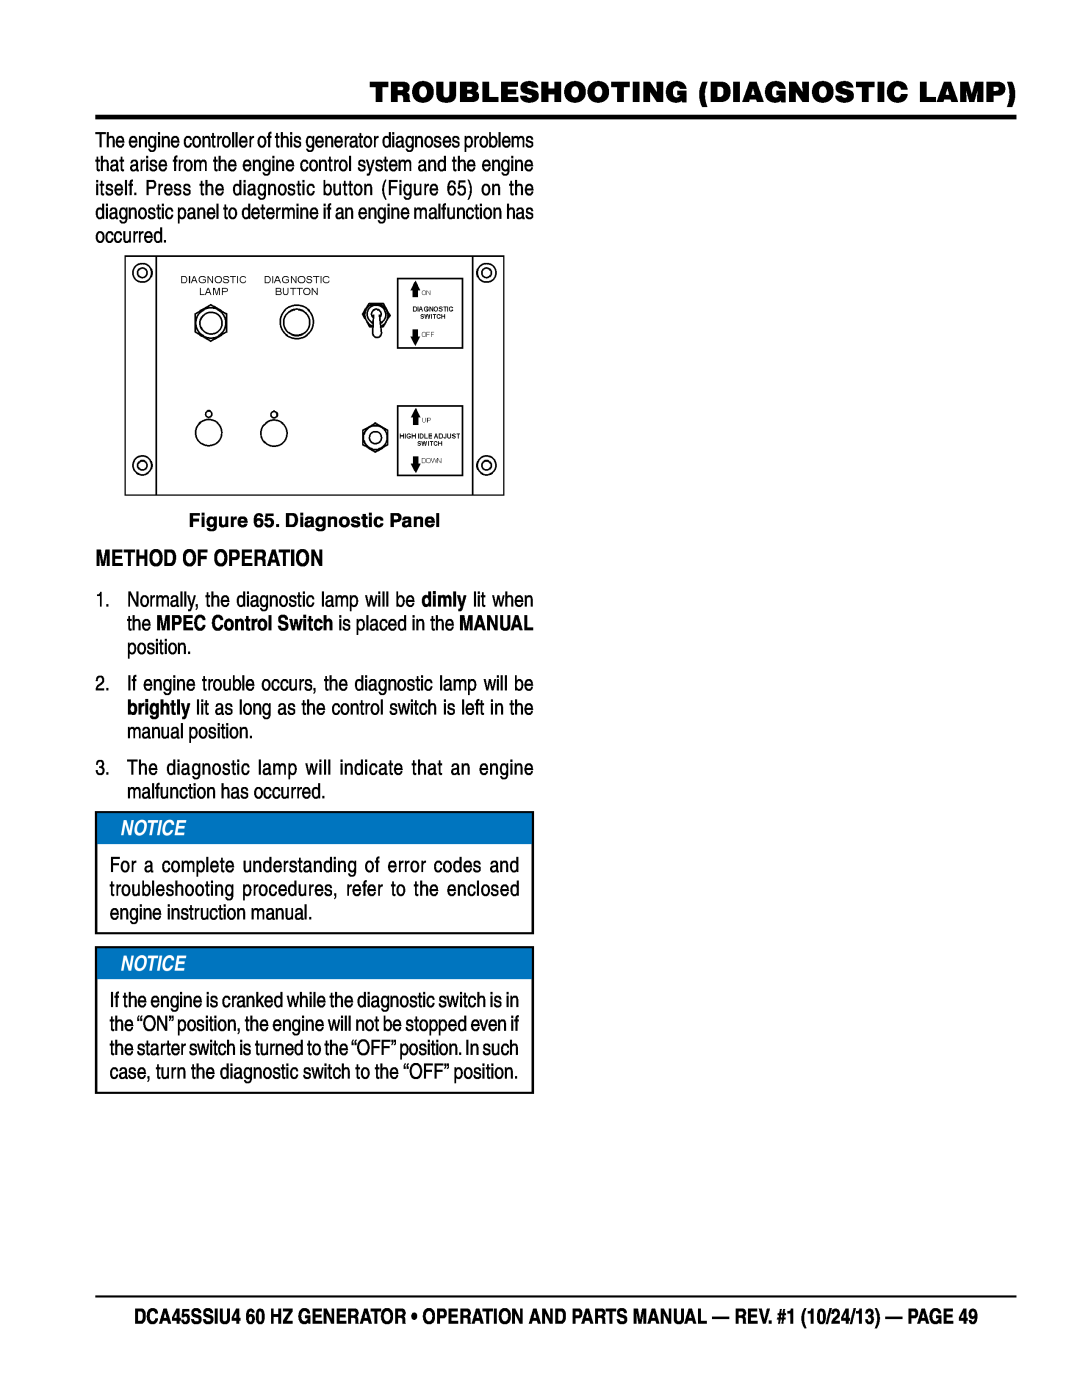 Multiquip dca45ssiu4 manual Troubleshooting Diagnostic lamp, Method of Operation 